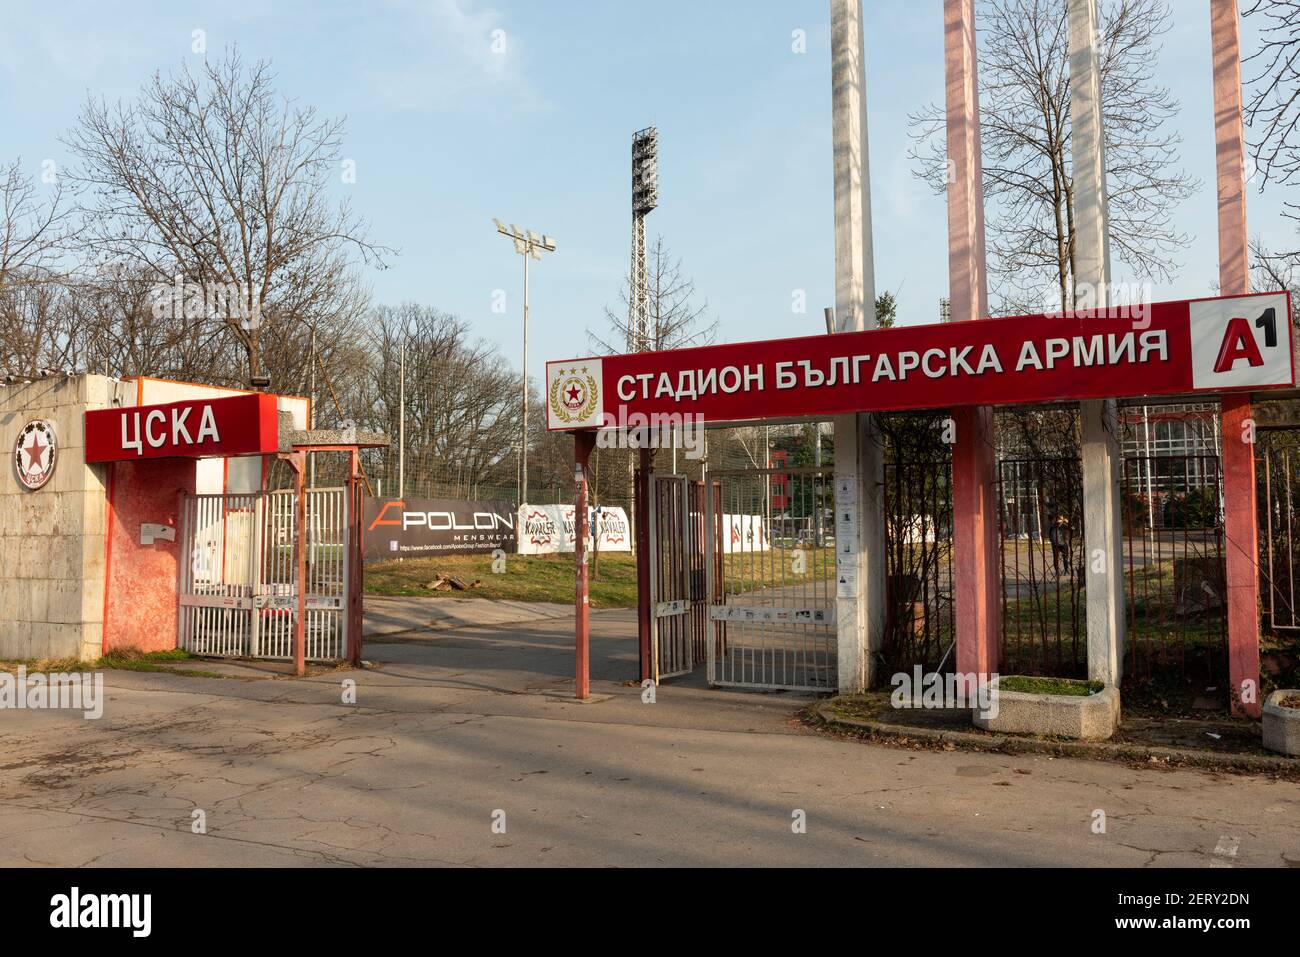 Bulgarian Army stadium and football venue of CSKA Sofia football team in the "Borisova Gradina" in Sofia, Bulgaria, Eastern Europe Stock Photo